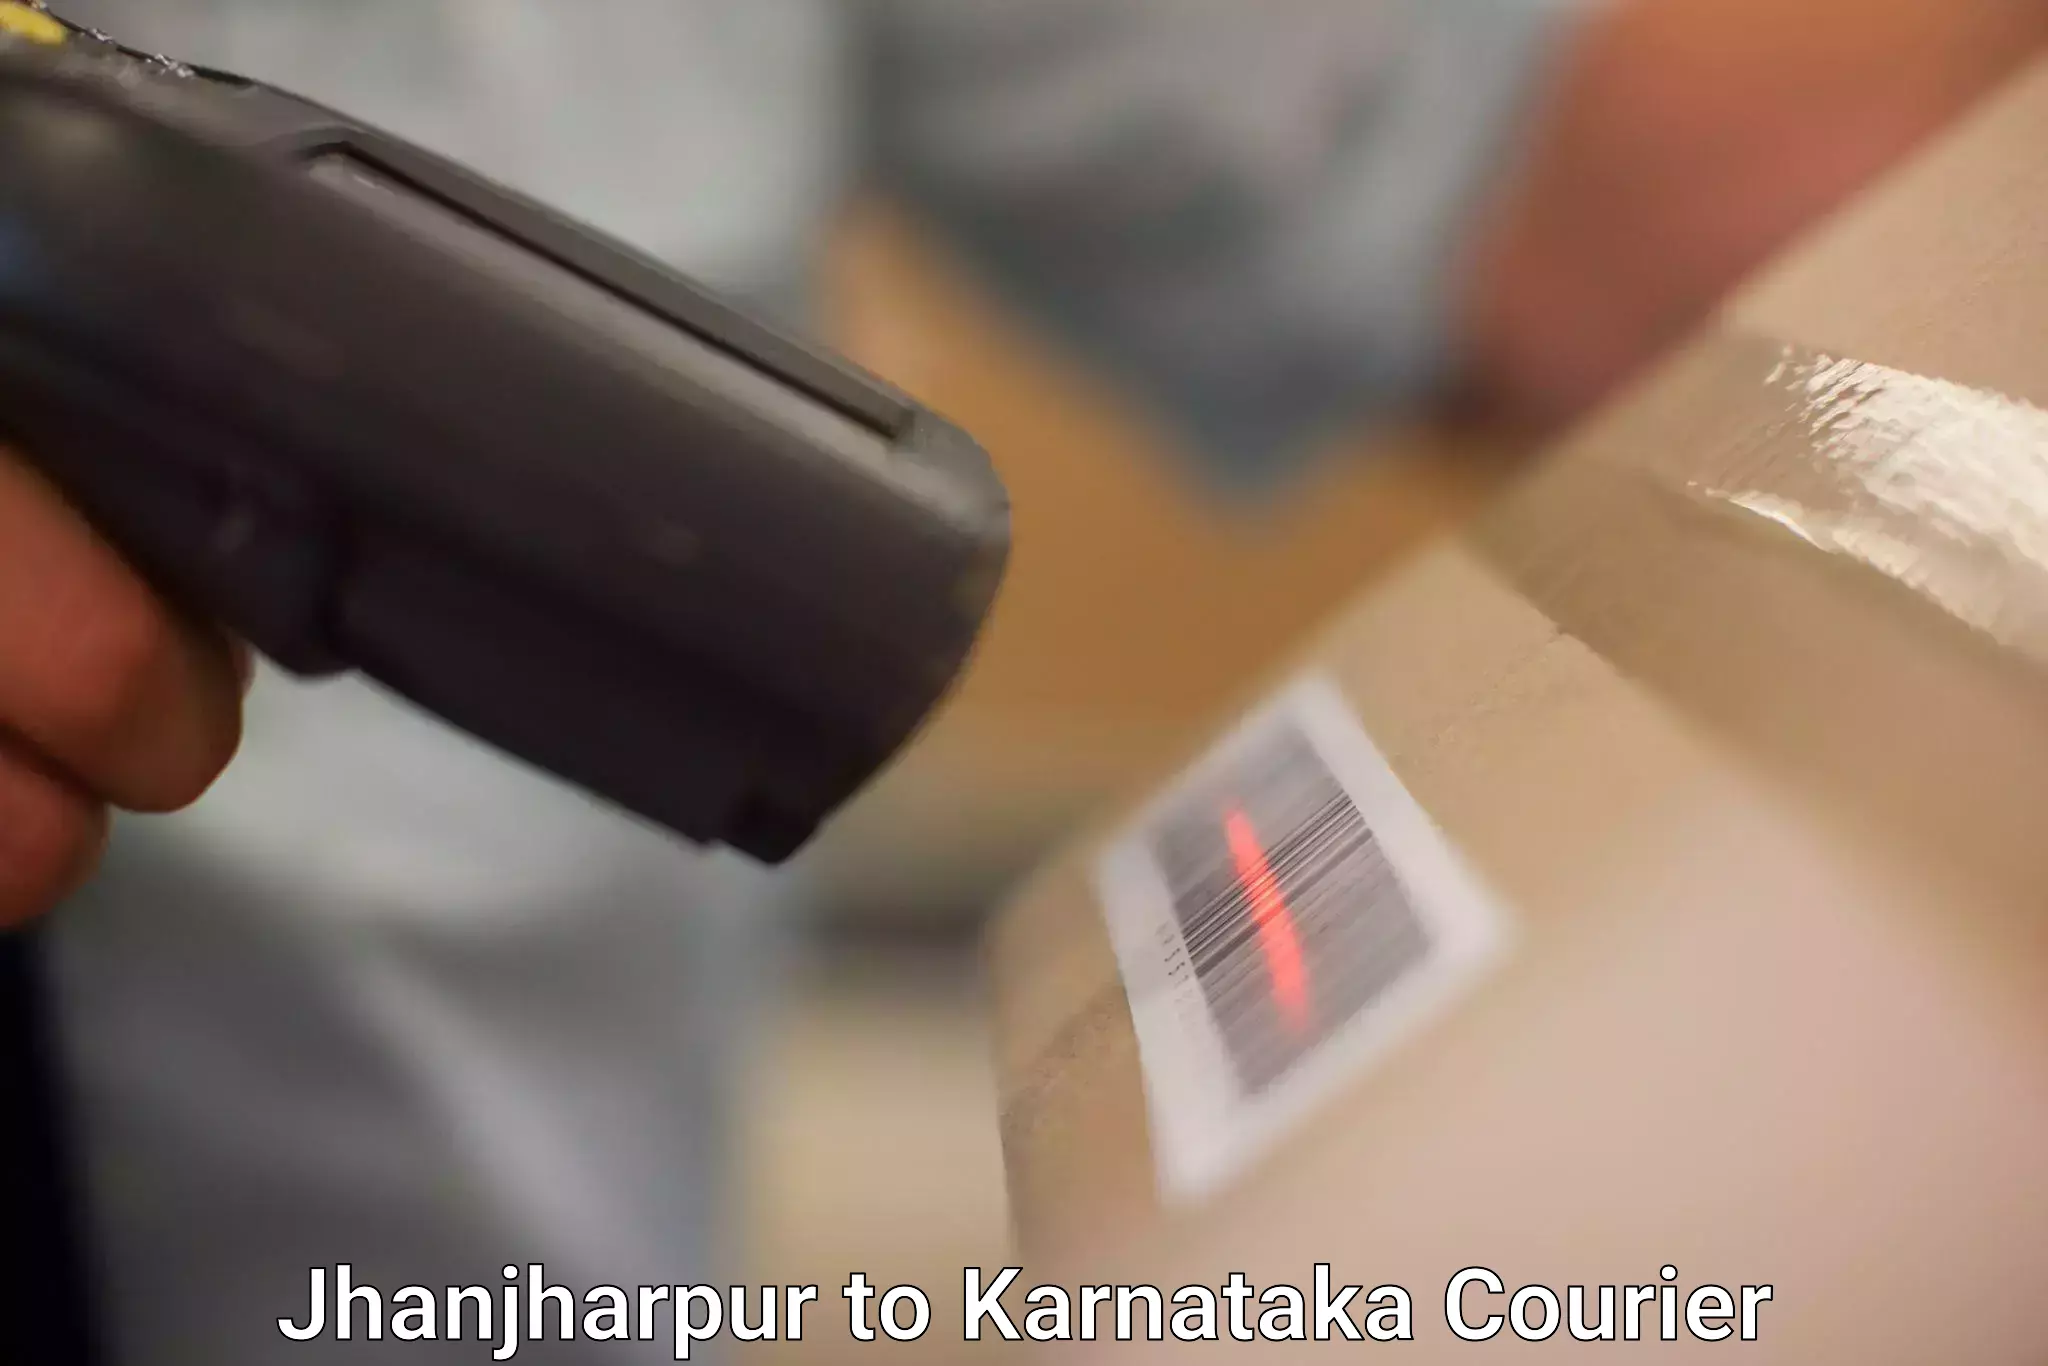 Next-day delivery options Jhanjharpur to Basavakalyan